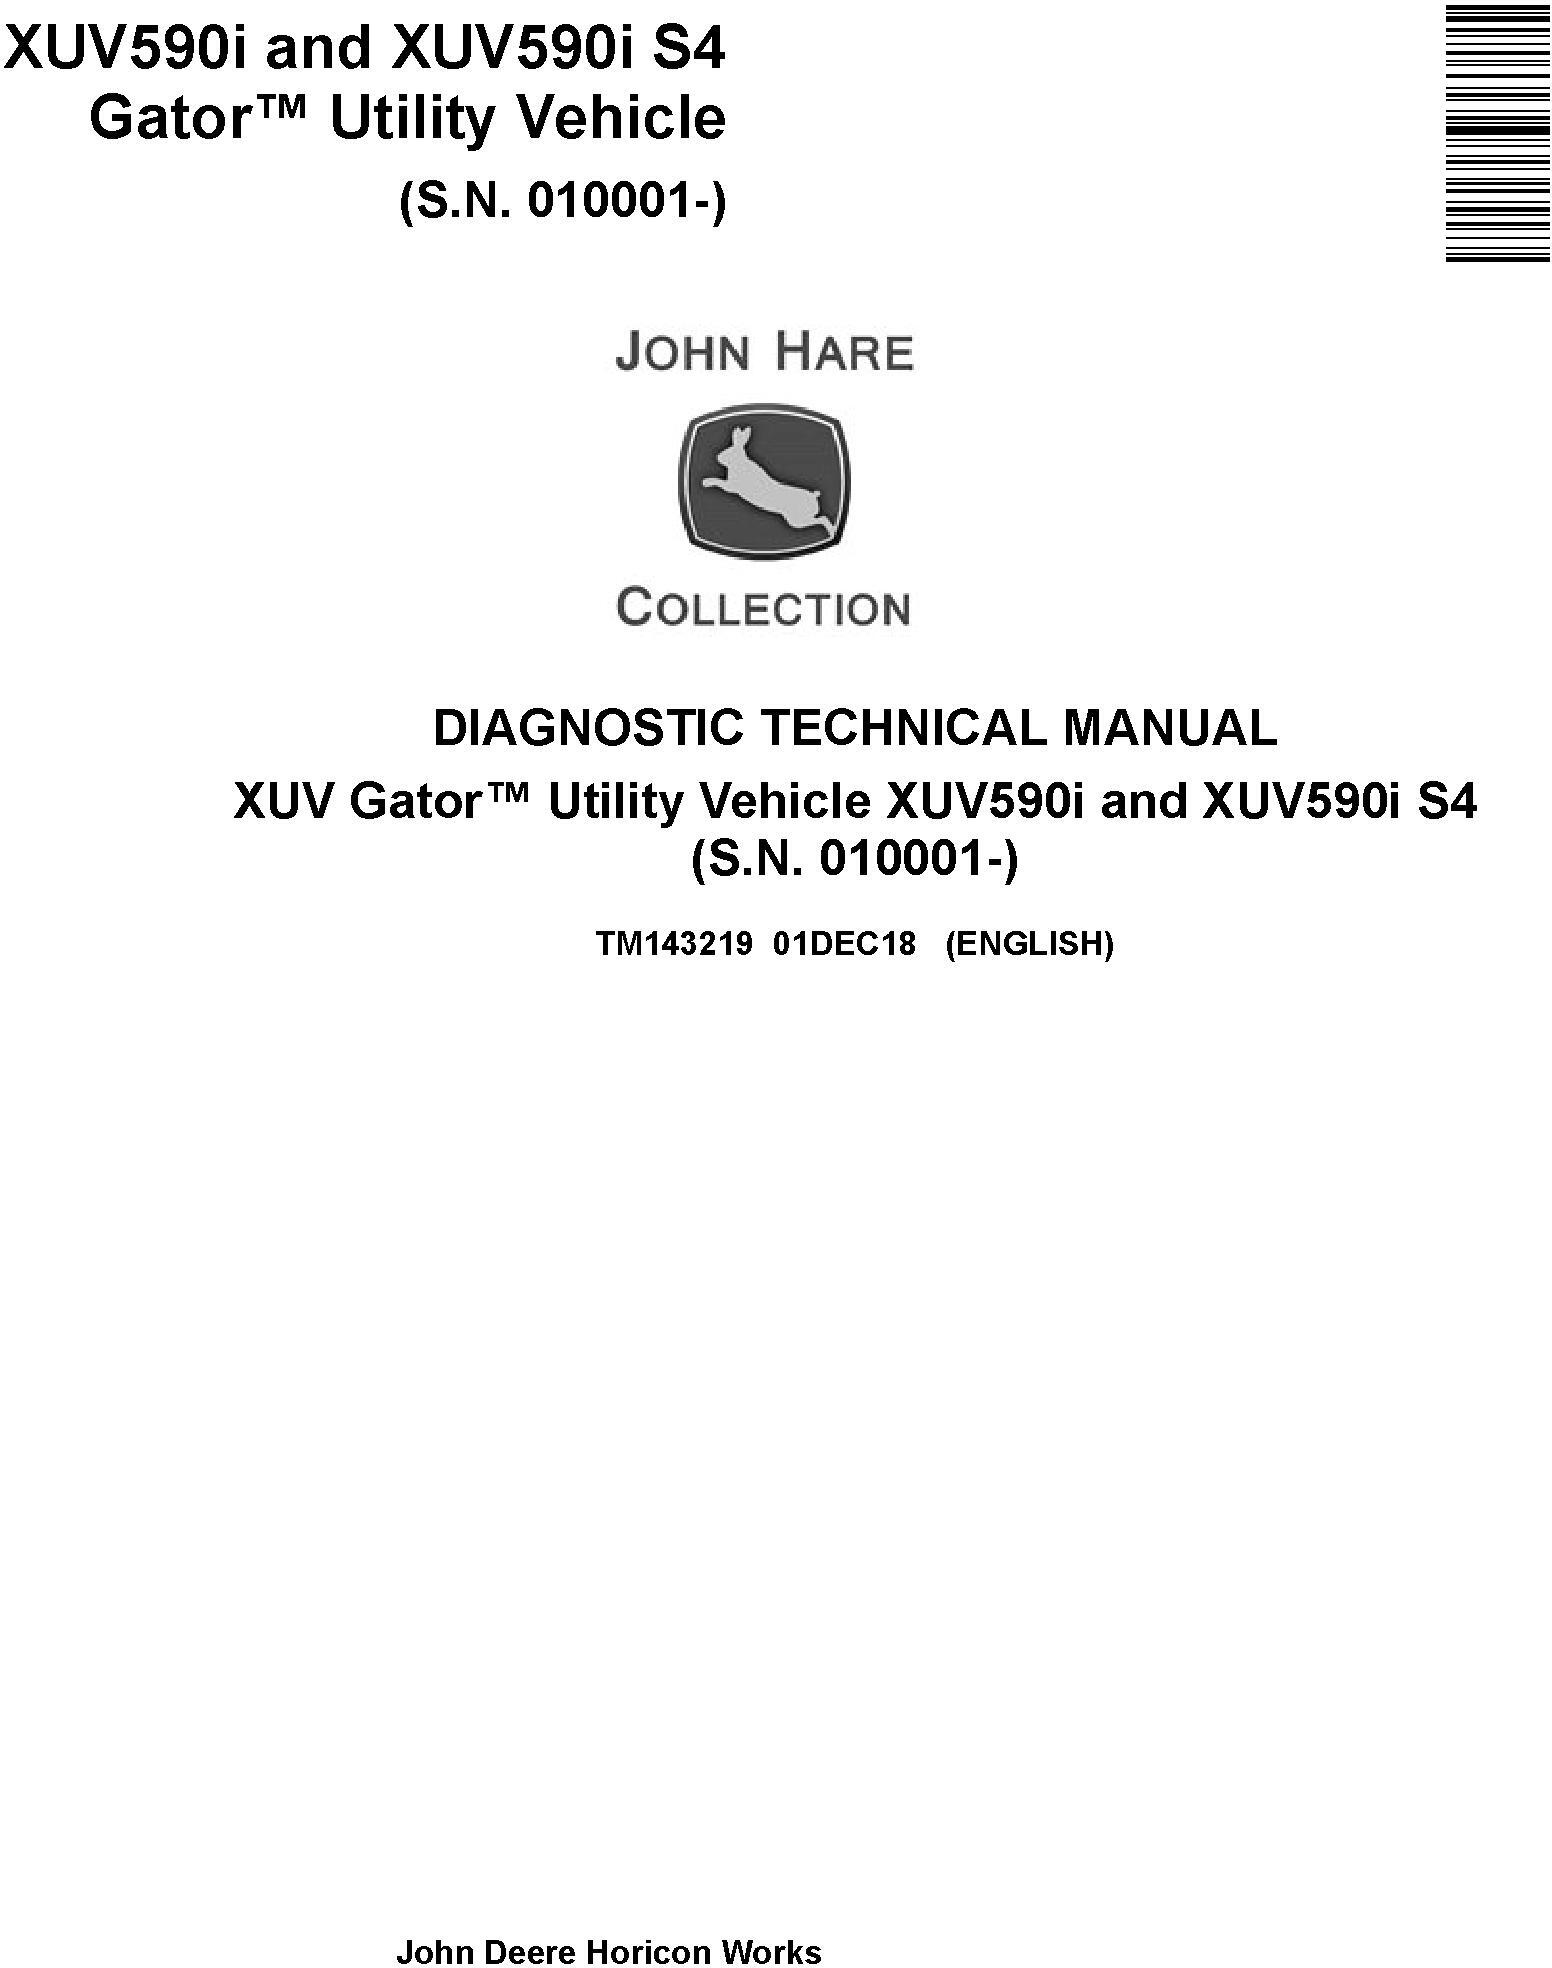 John Deere XUV590i XUV590i S4 Gator Utility Vehicle Diagnostic Technical Manual TM143219